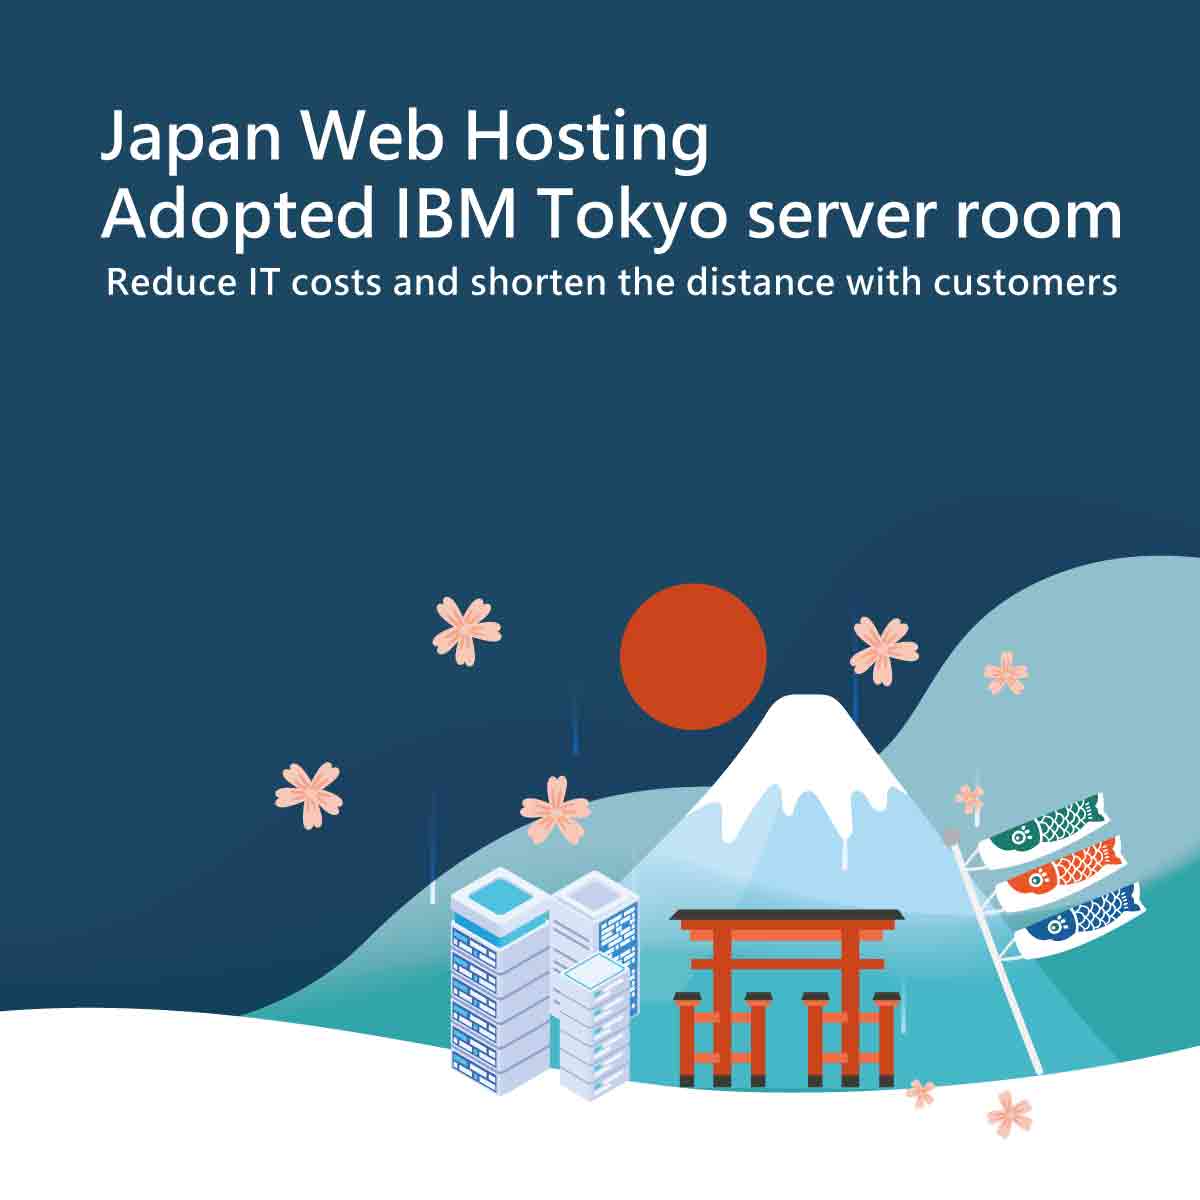 Japan Web Hosting